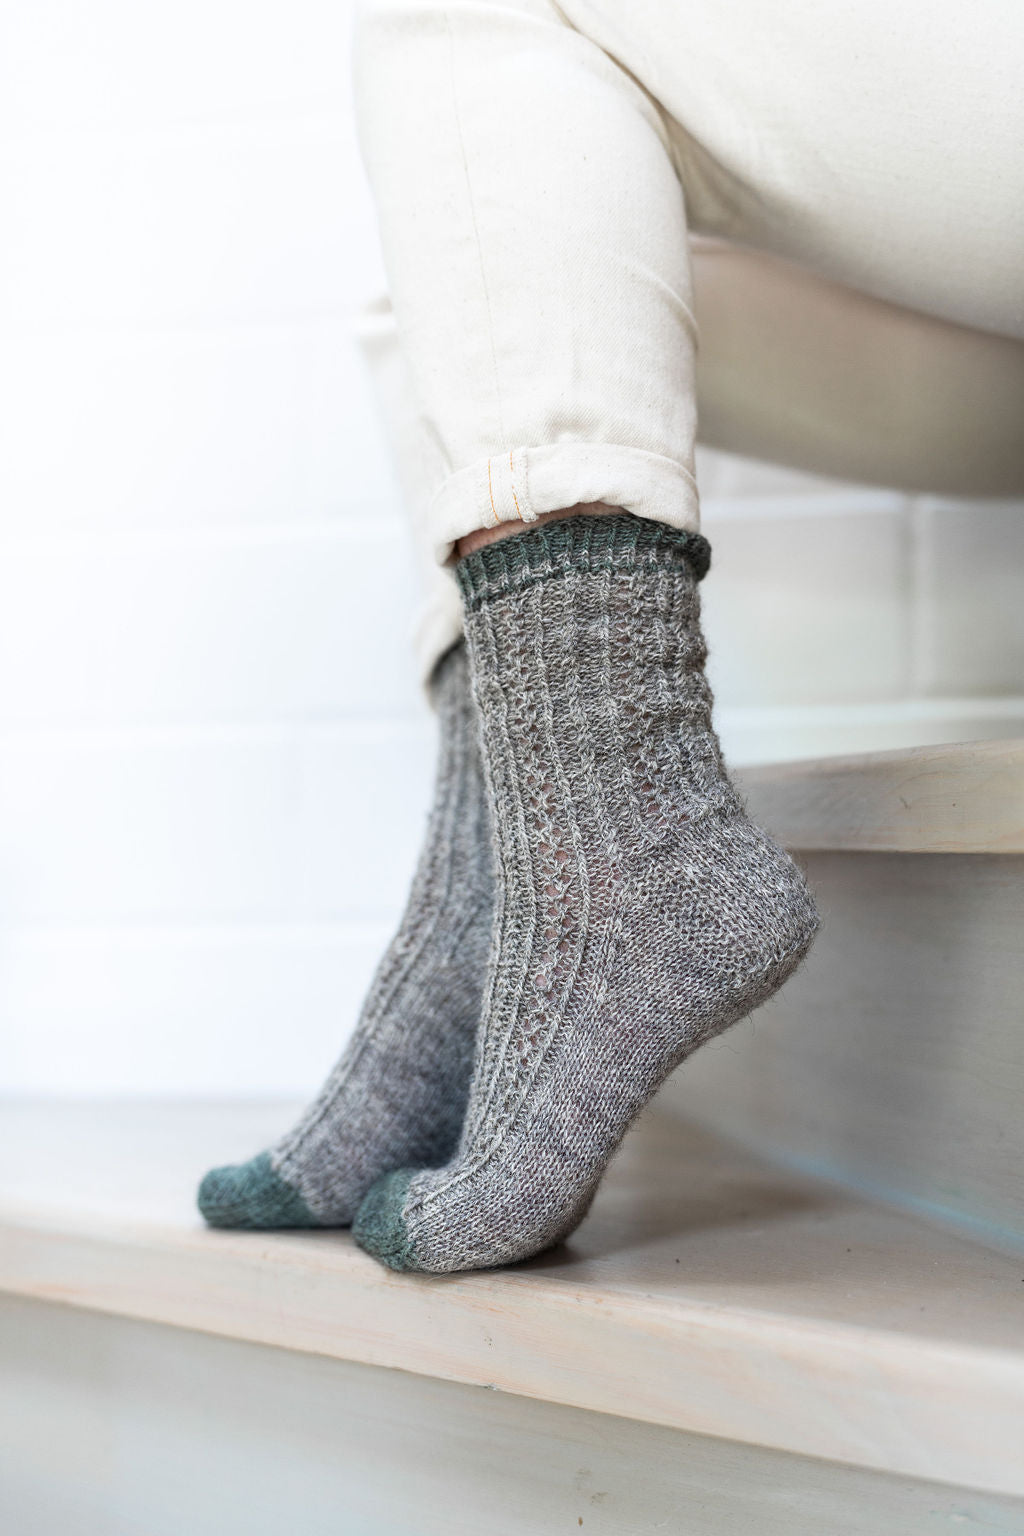 Dancing Sunlight - Socks - Making Stories - Knitting Sustainably.